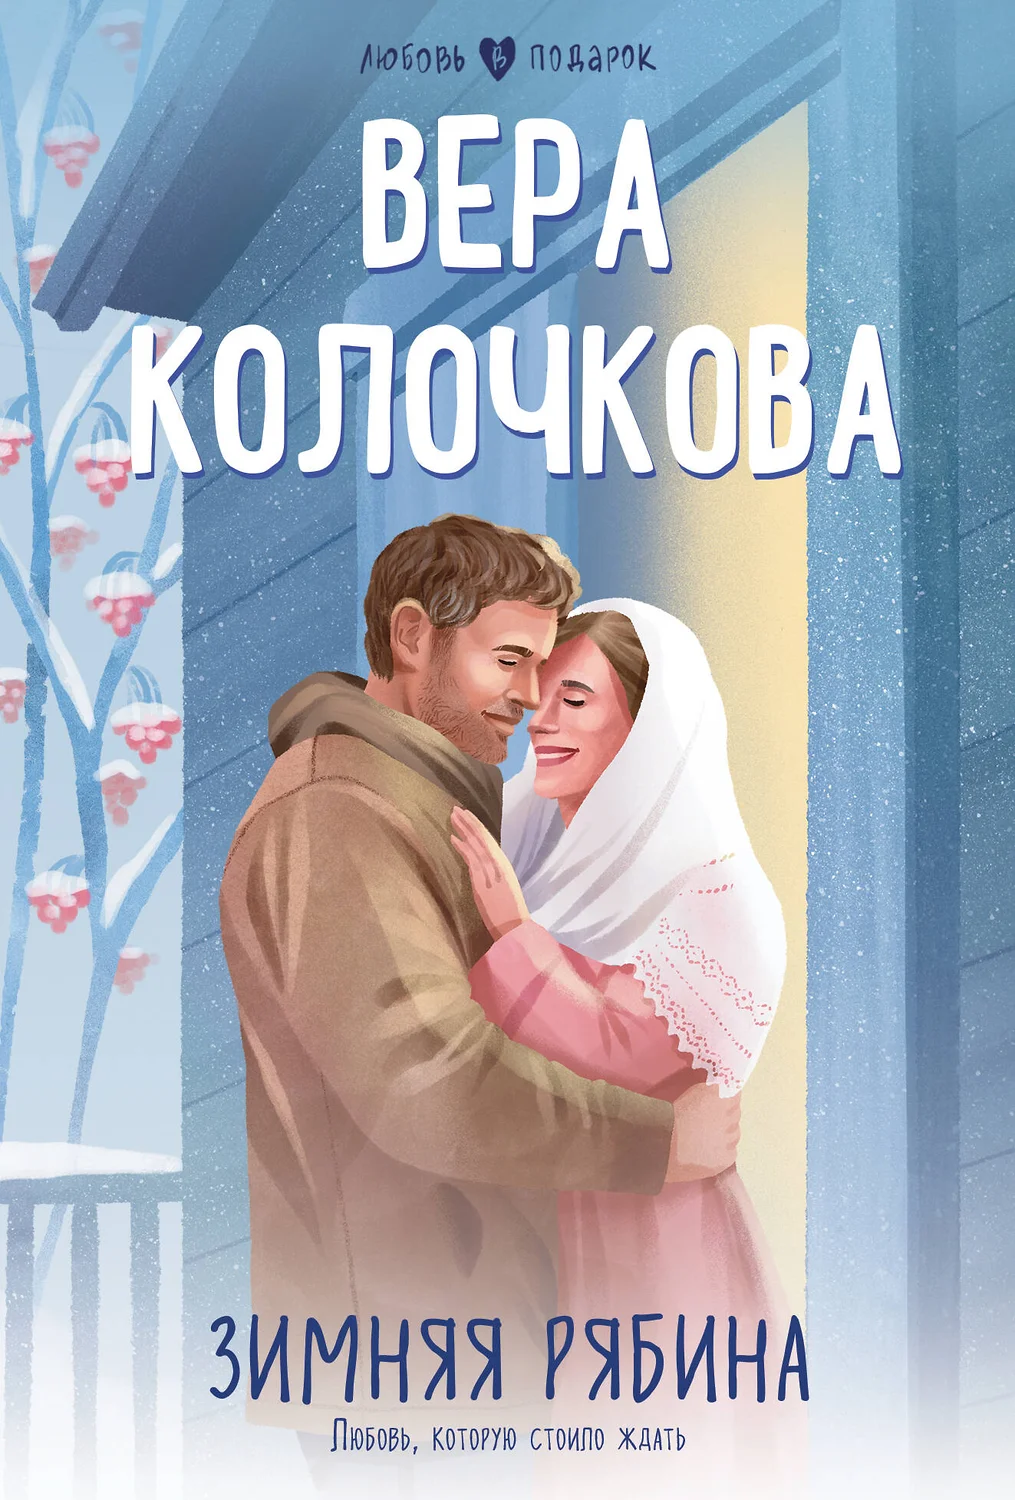 Зимняя рябина Книга Колочкова Вера 16+